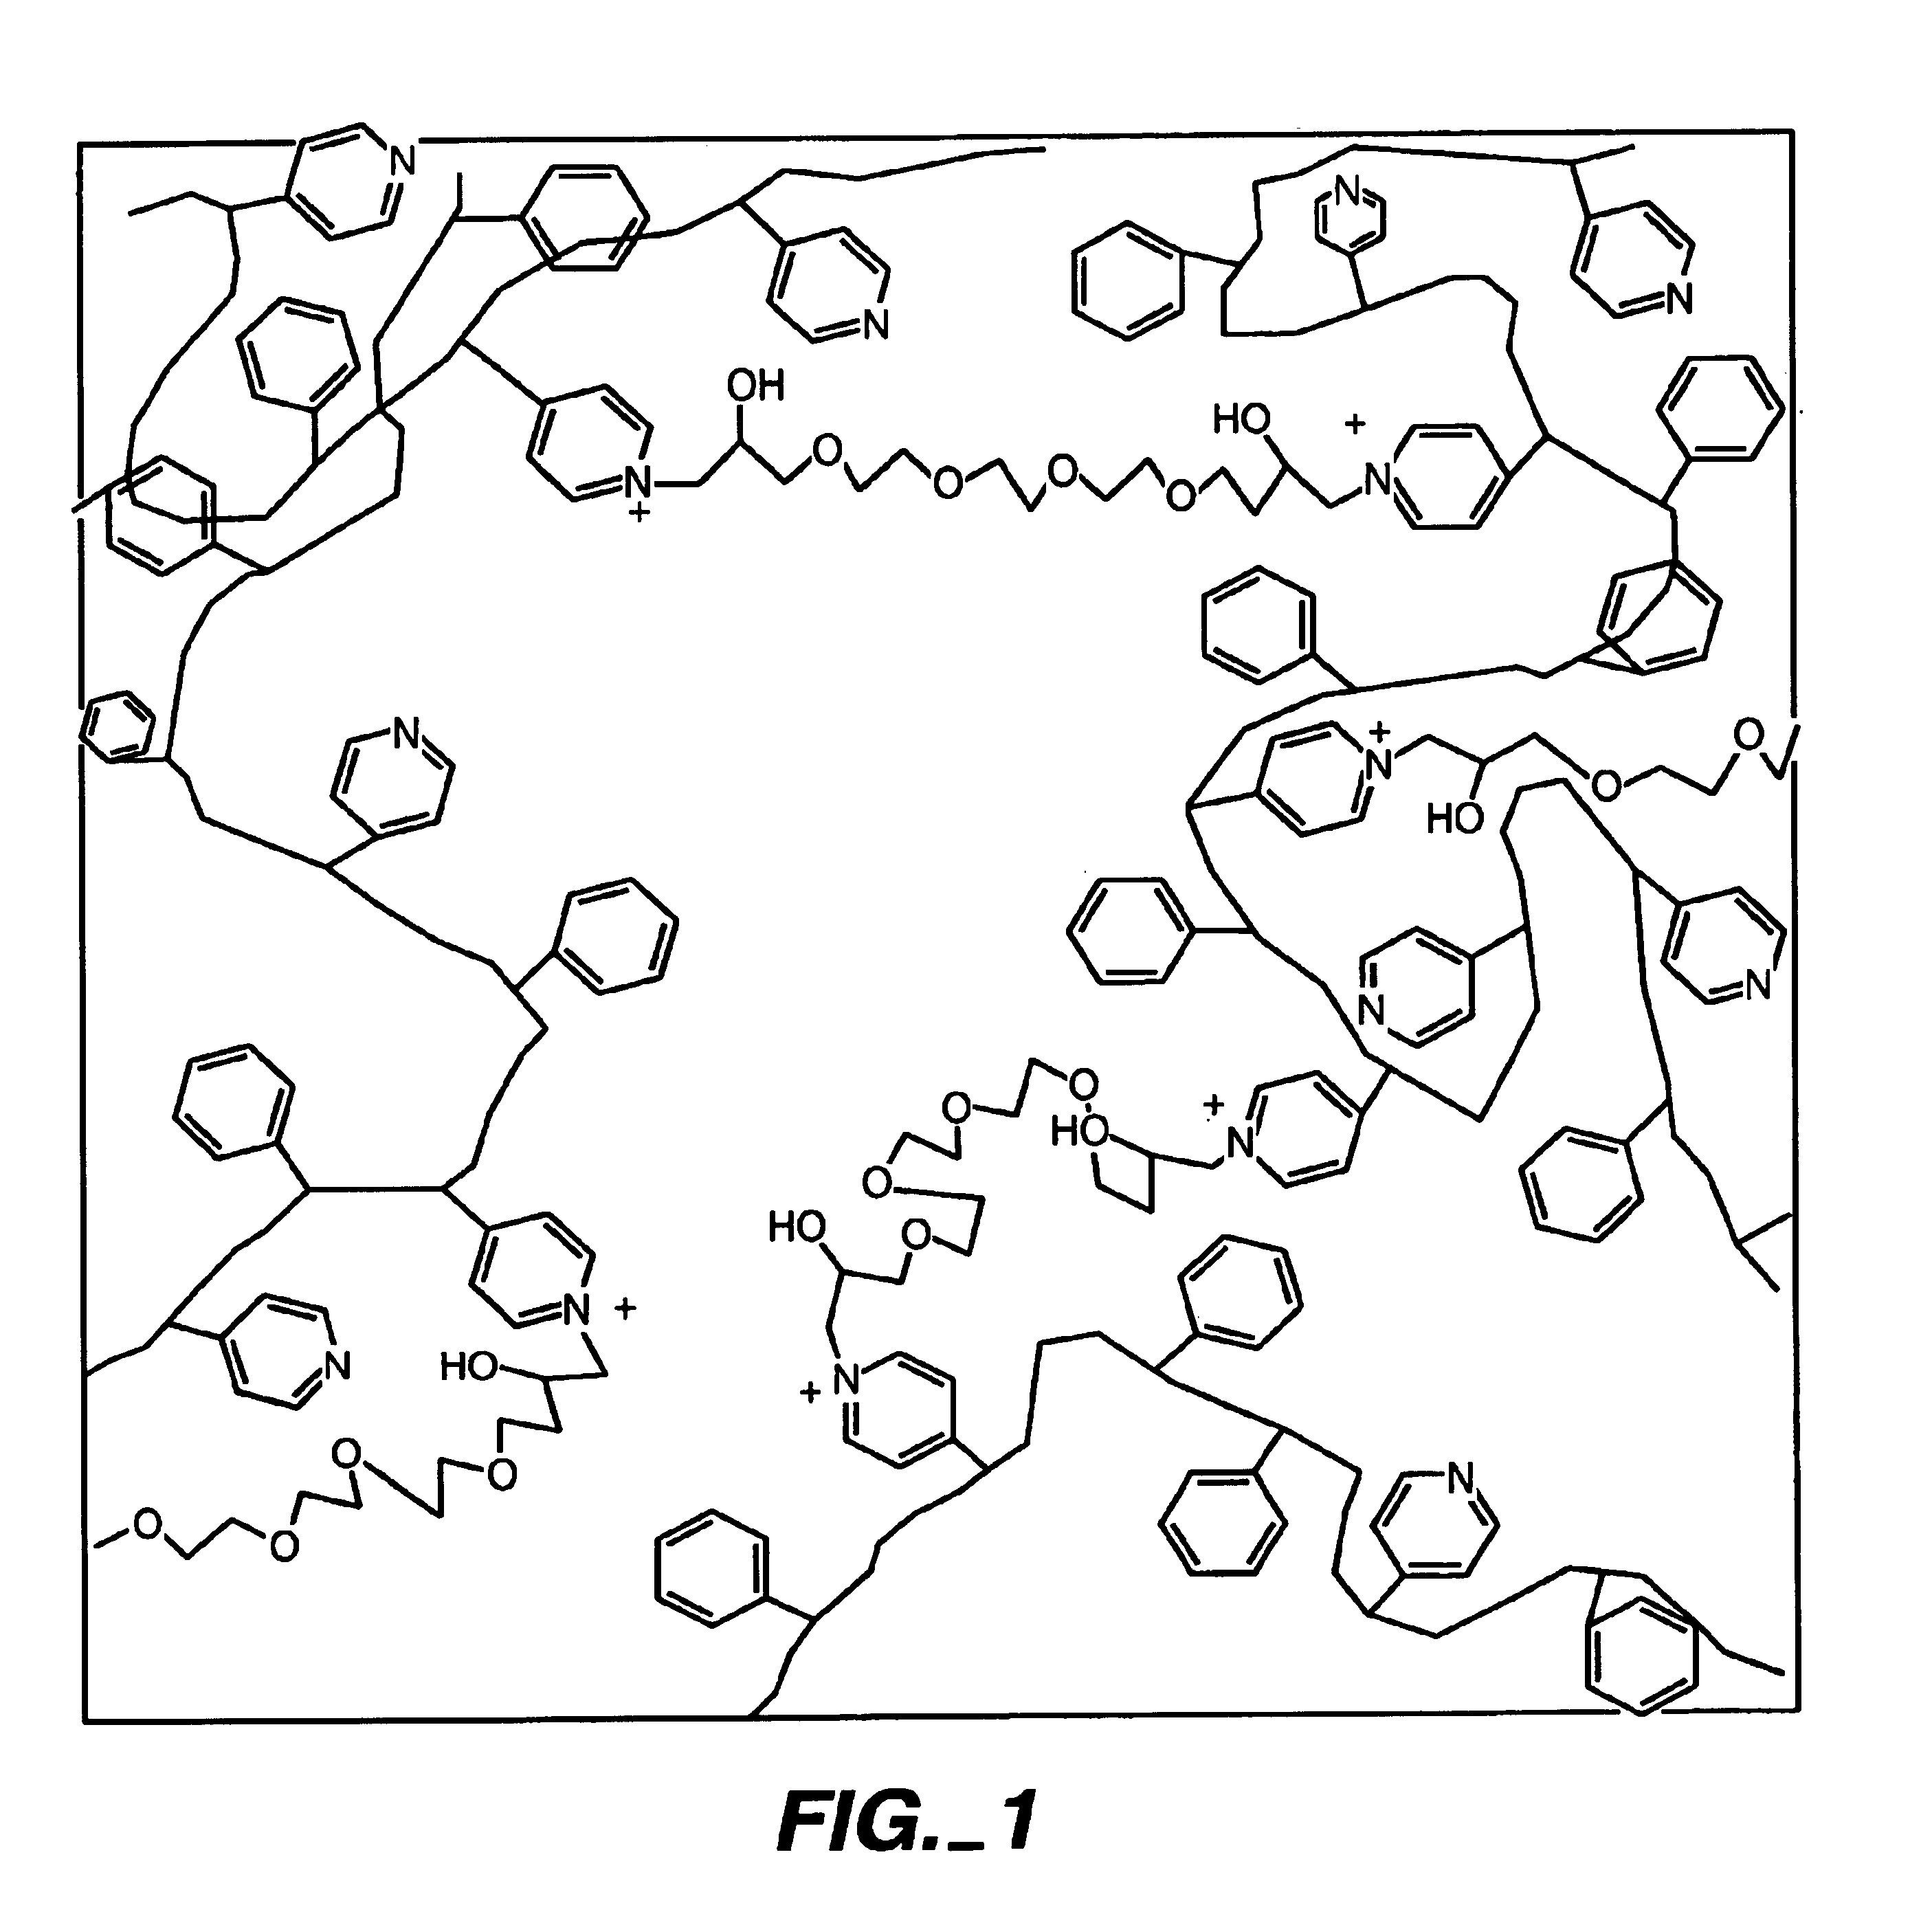 Biosensor membranes composed of polymers containing heterocyclic nitrogens